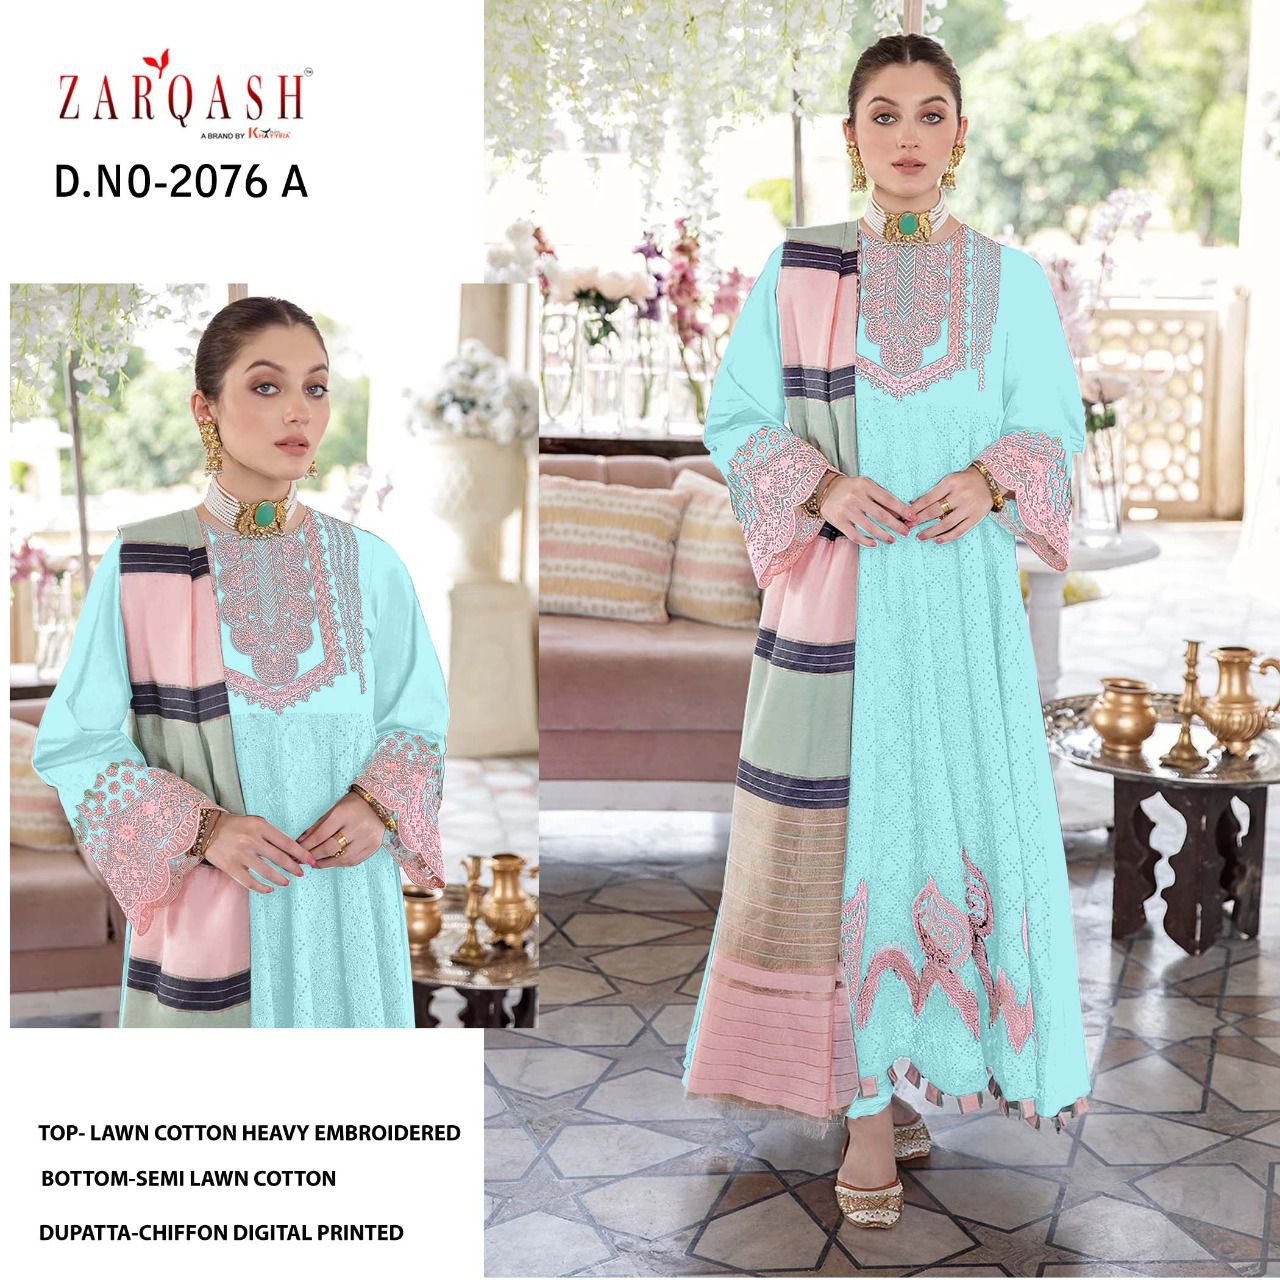 Zarqash Noor Jahan 2076-A